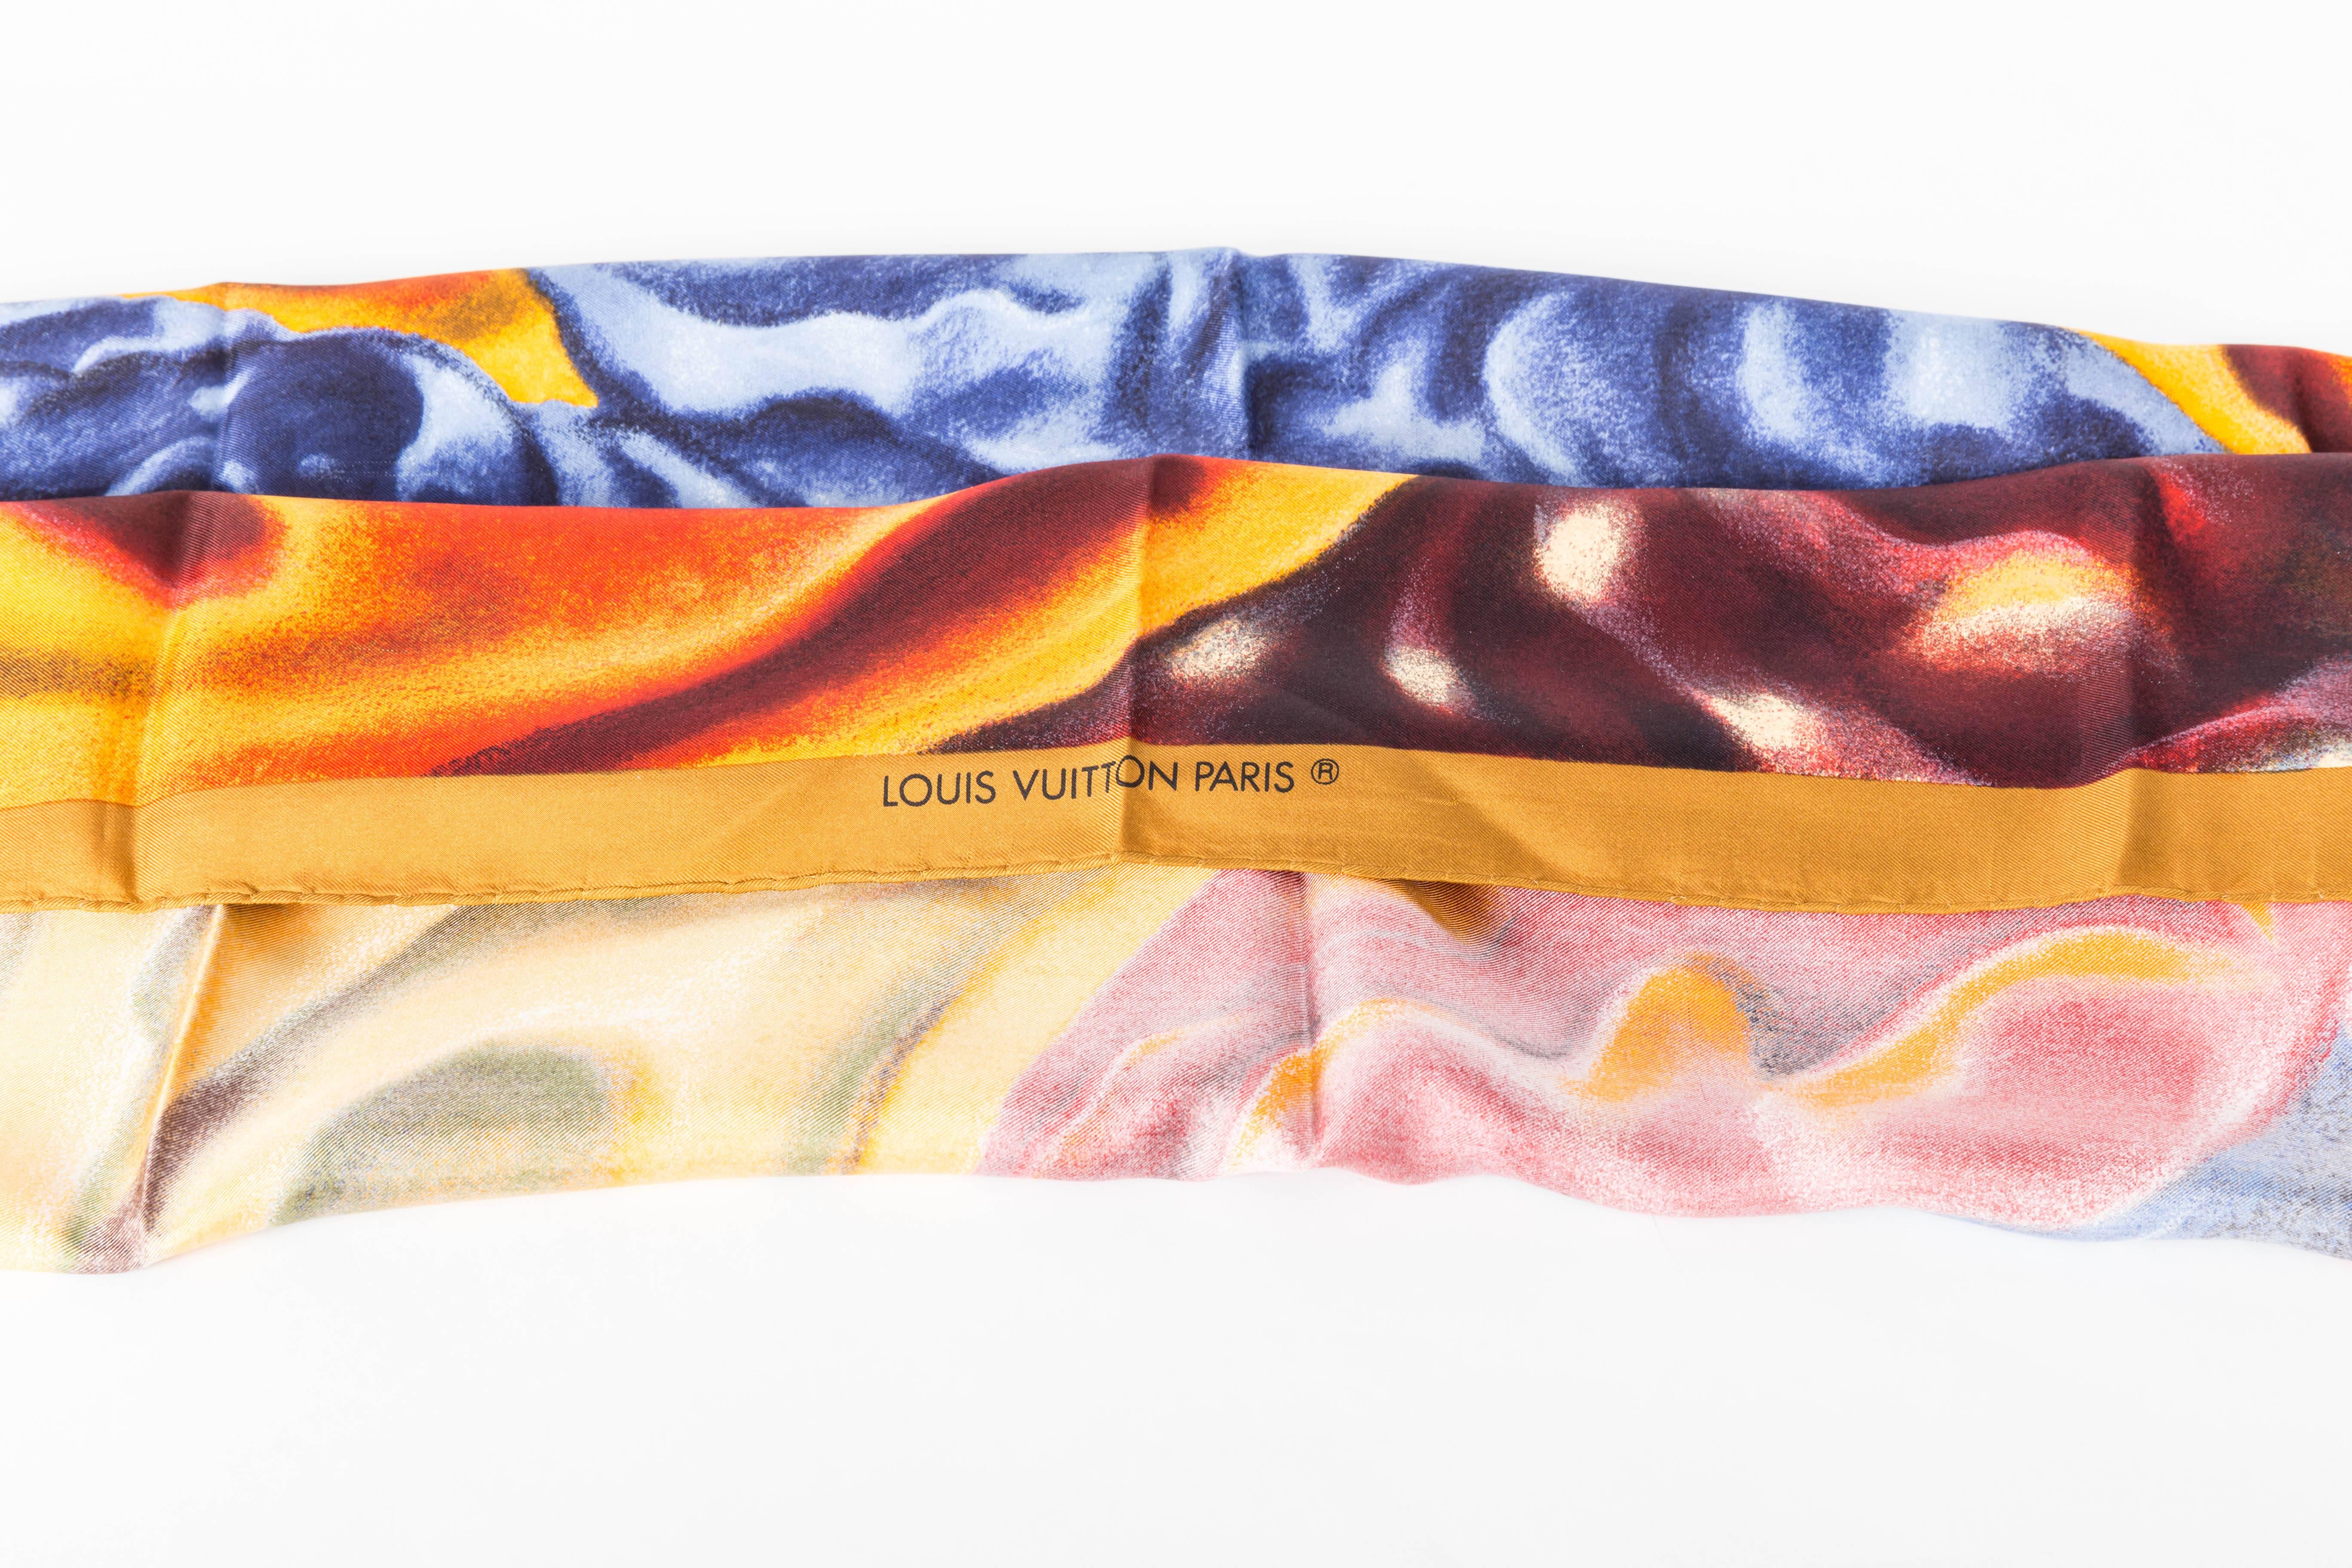 Louis Vuitton Paris Silk Scarf by S Chia For Sale 3